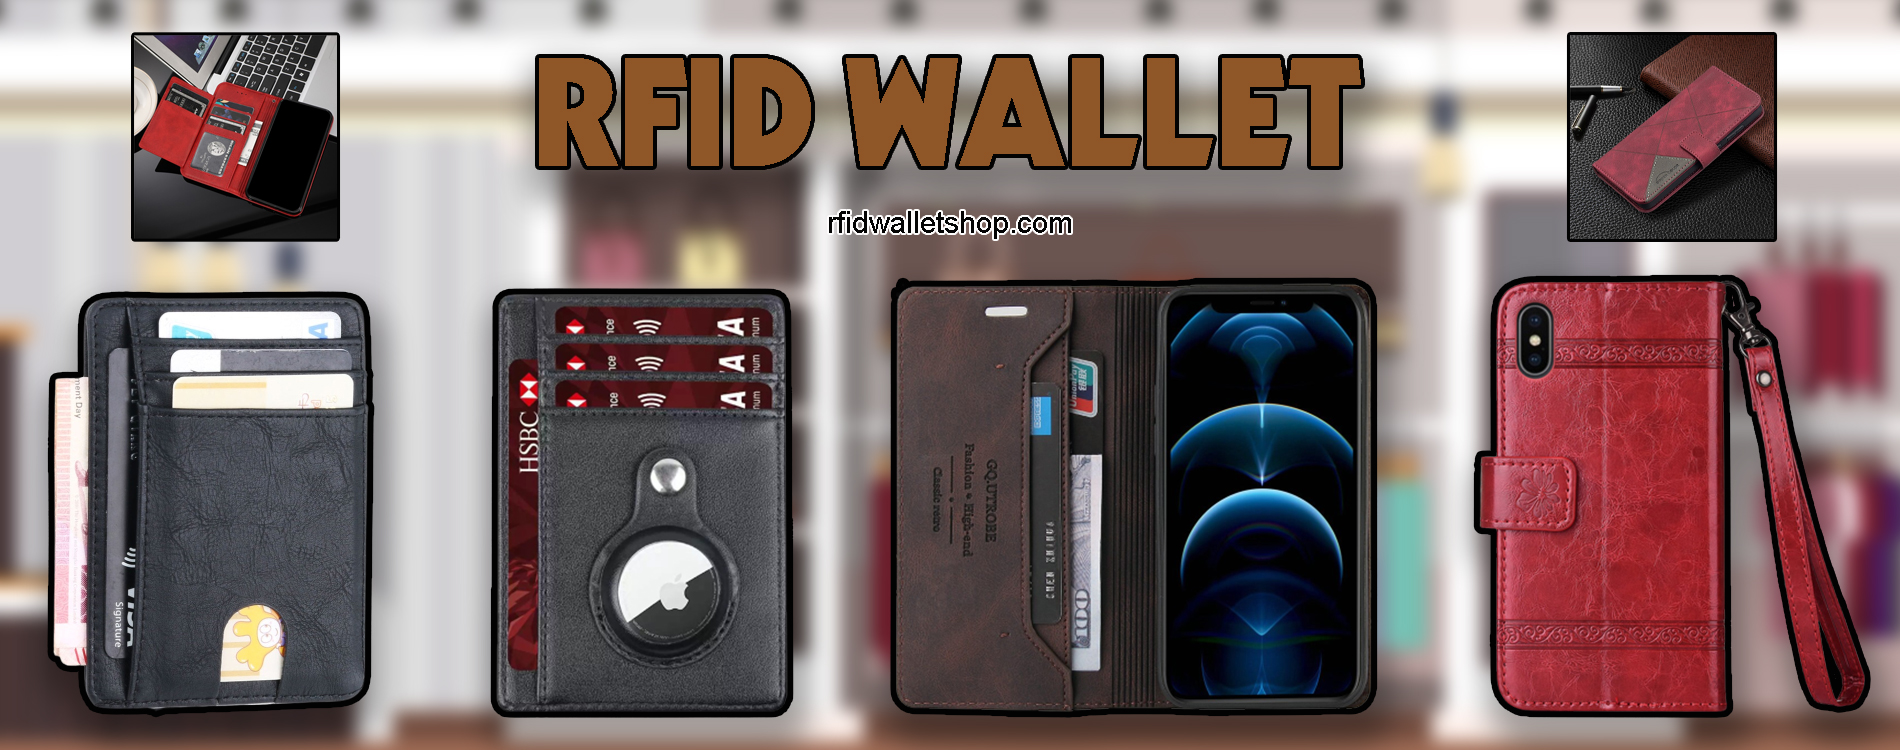 rfid-wallet-banner